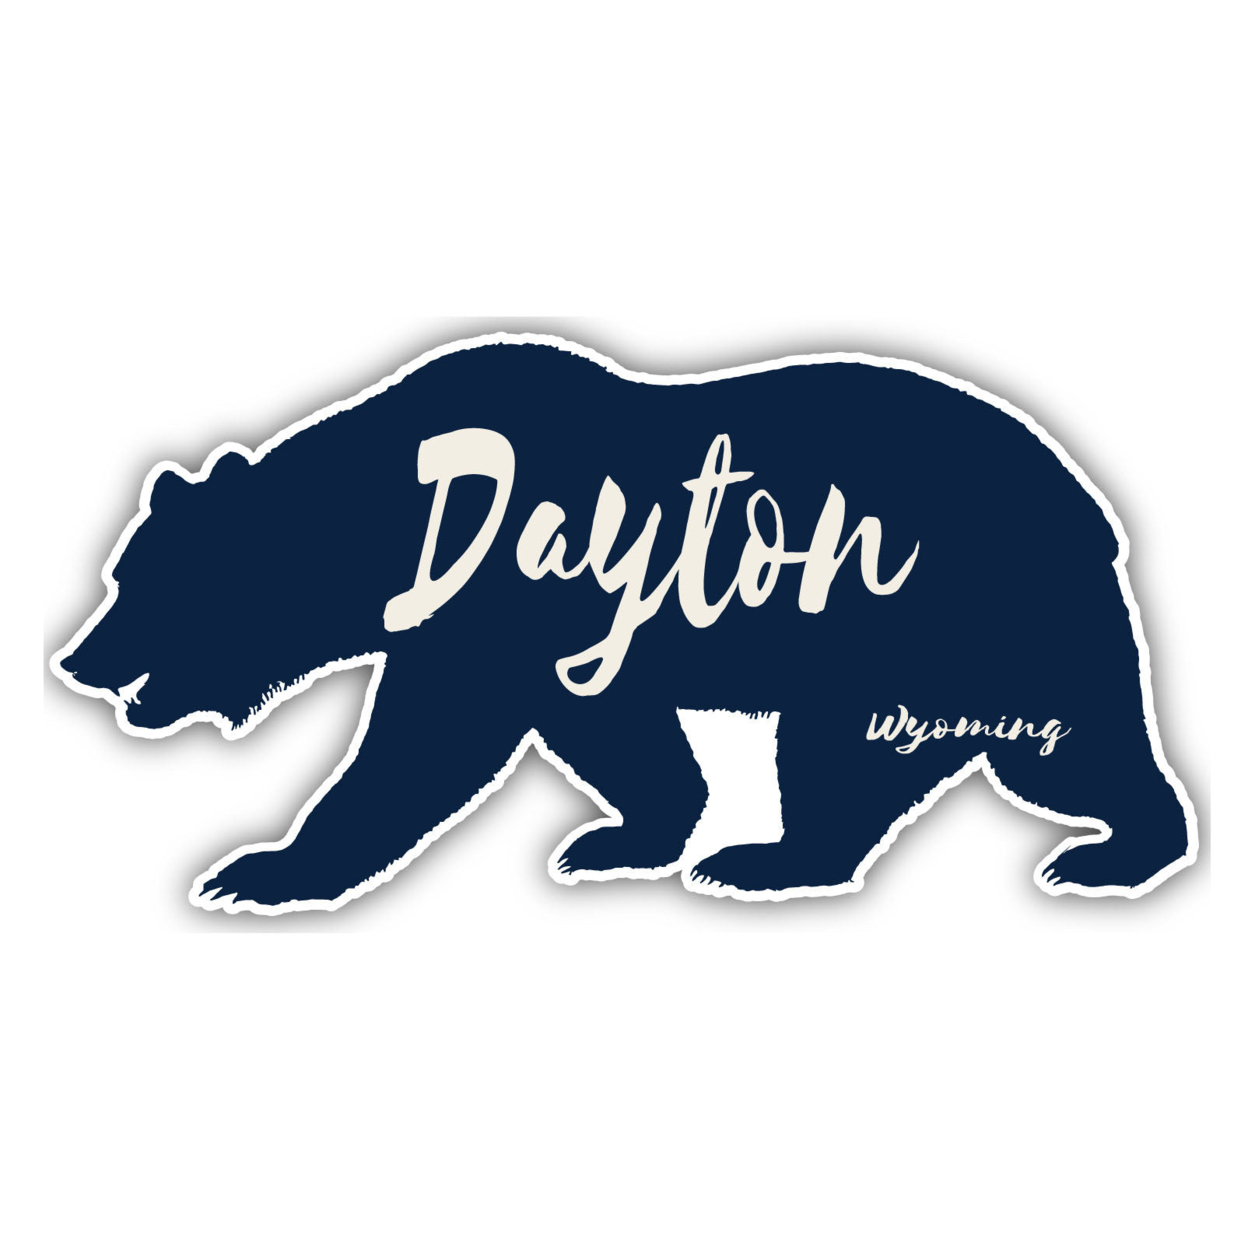 Dayton Wyoming Souvenir Decorative Stickers (Choose Theme And Size) - Single Unit, 6-Inch, Bear